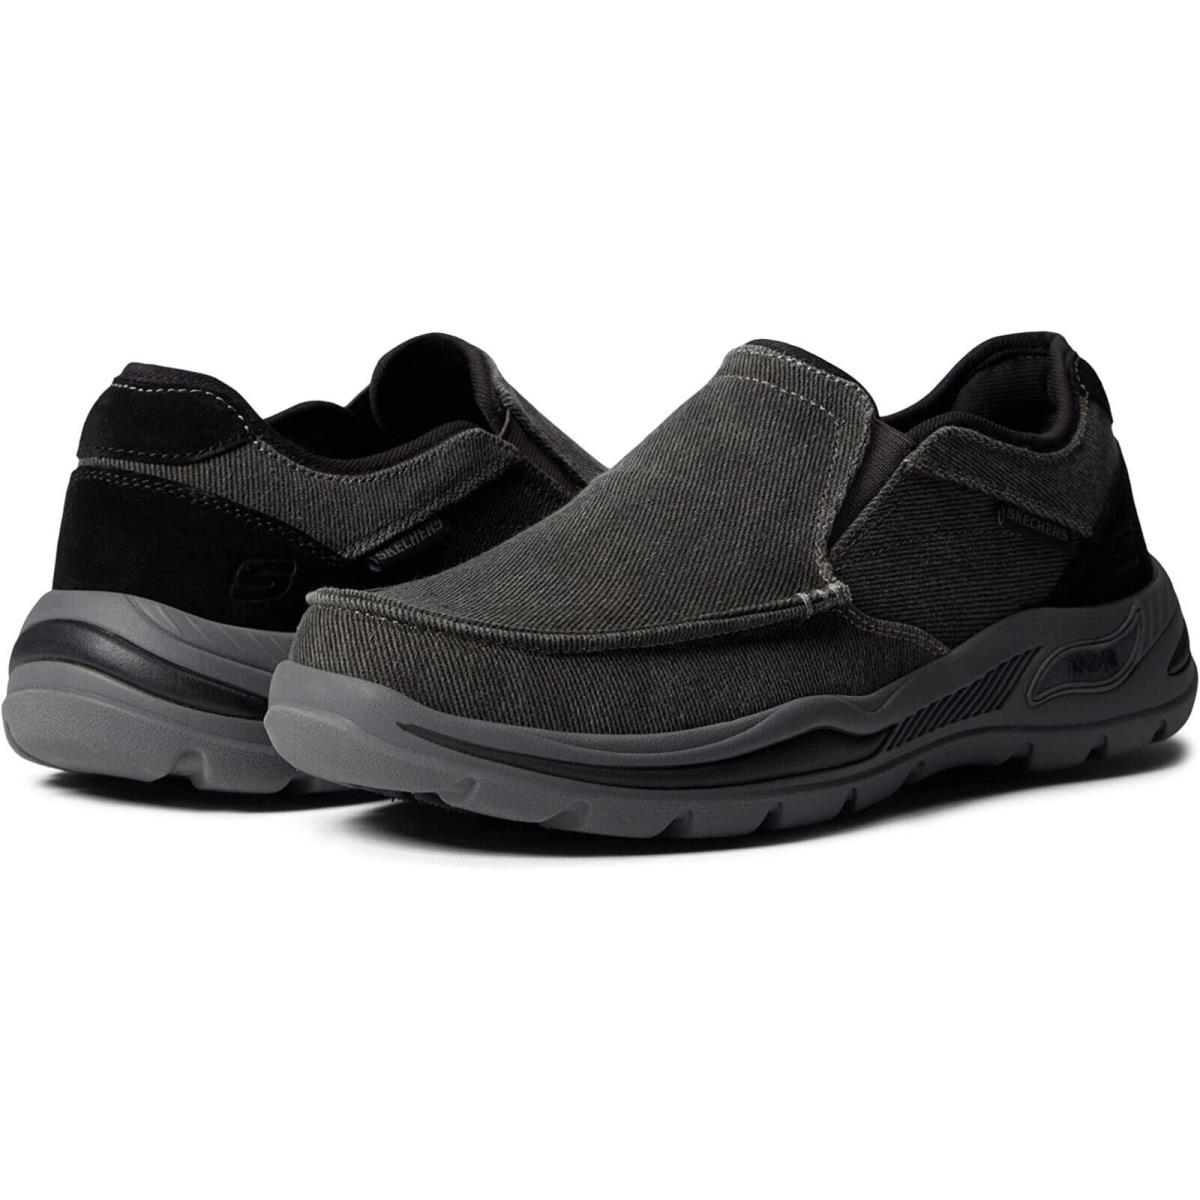 Skechers N7871 Mens Black Arch Fit Motley Daven Slip-on Shoes Size US 9 EU 42